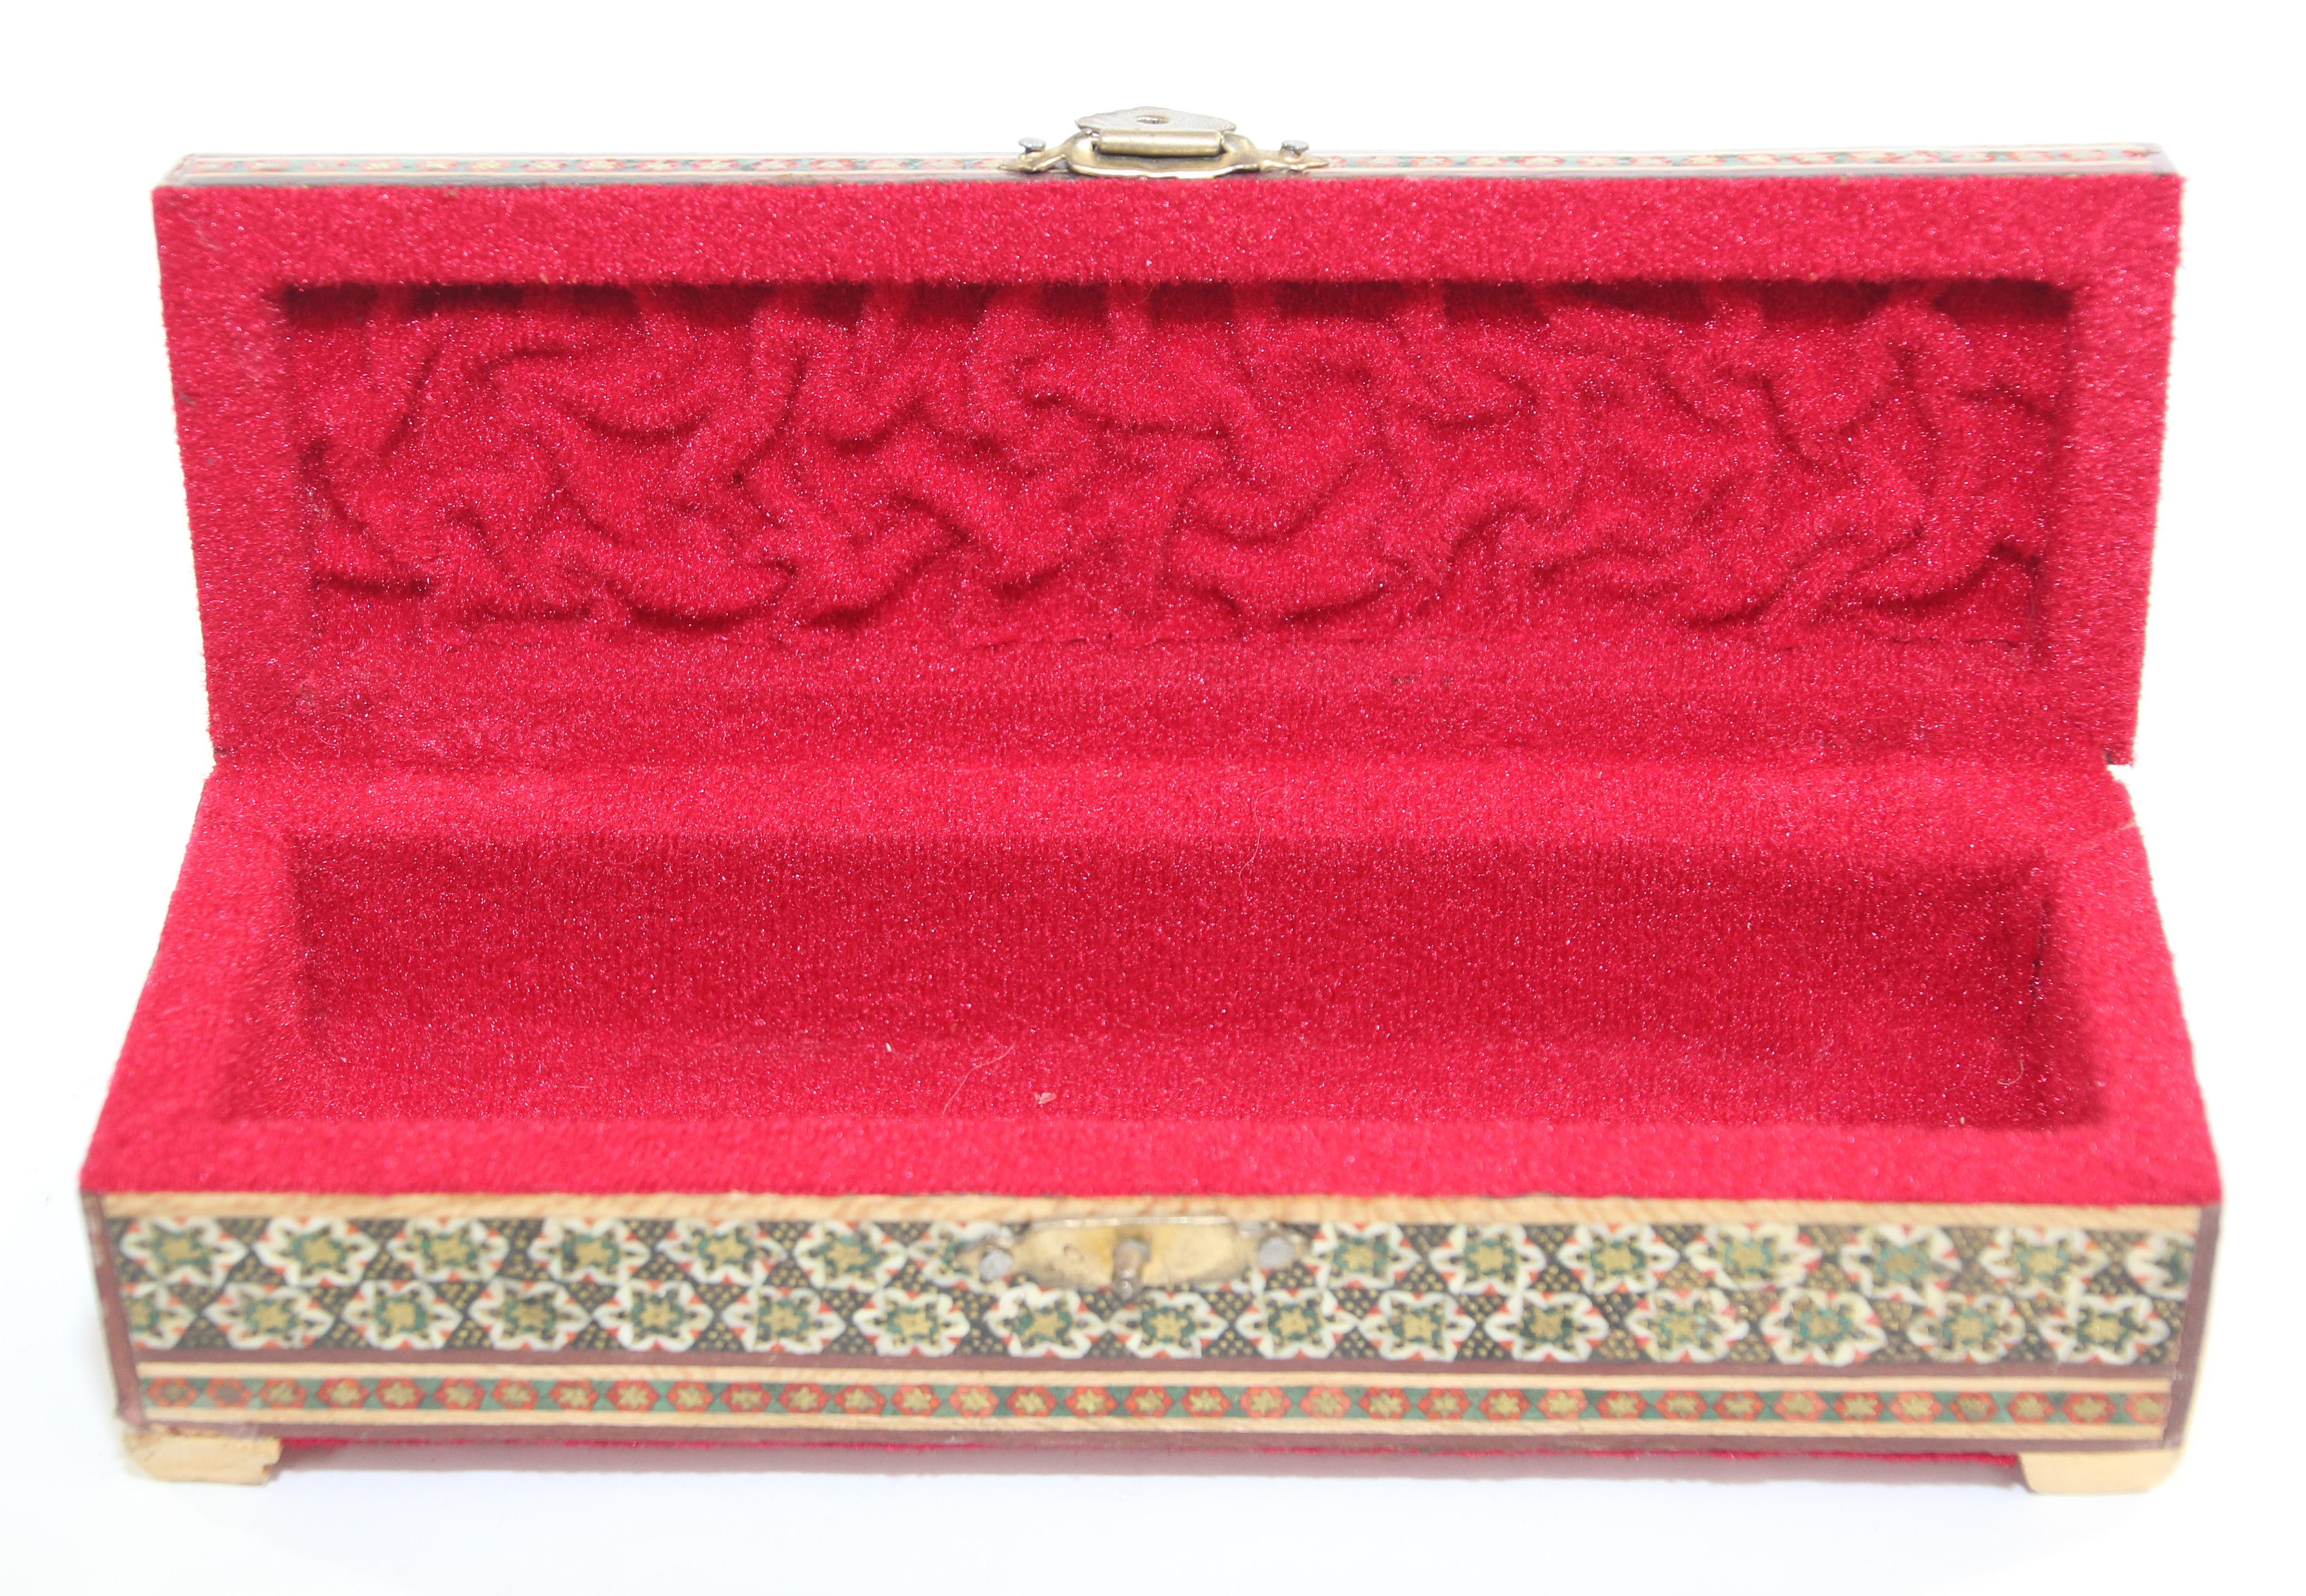 1950s Middle Eastern Moorish Inlaid Jewelry Trinket Mosaic Box 2